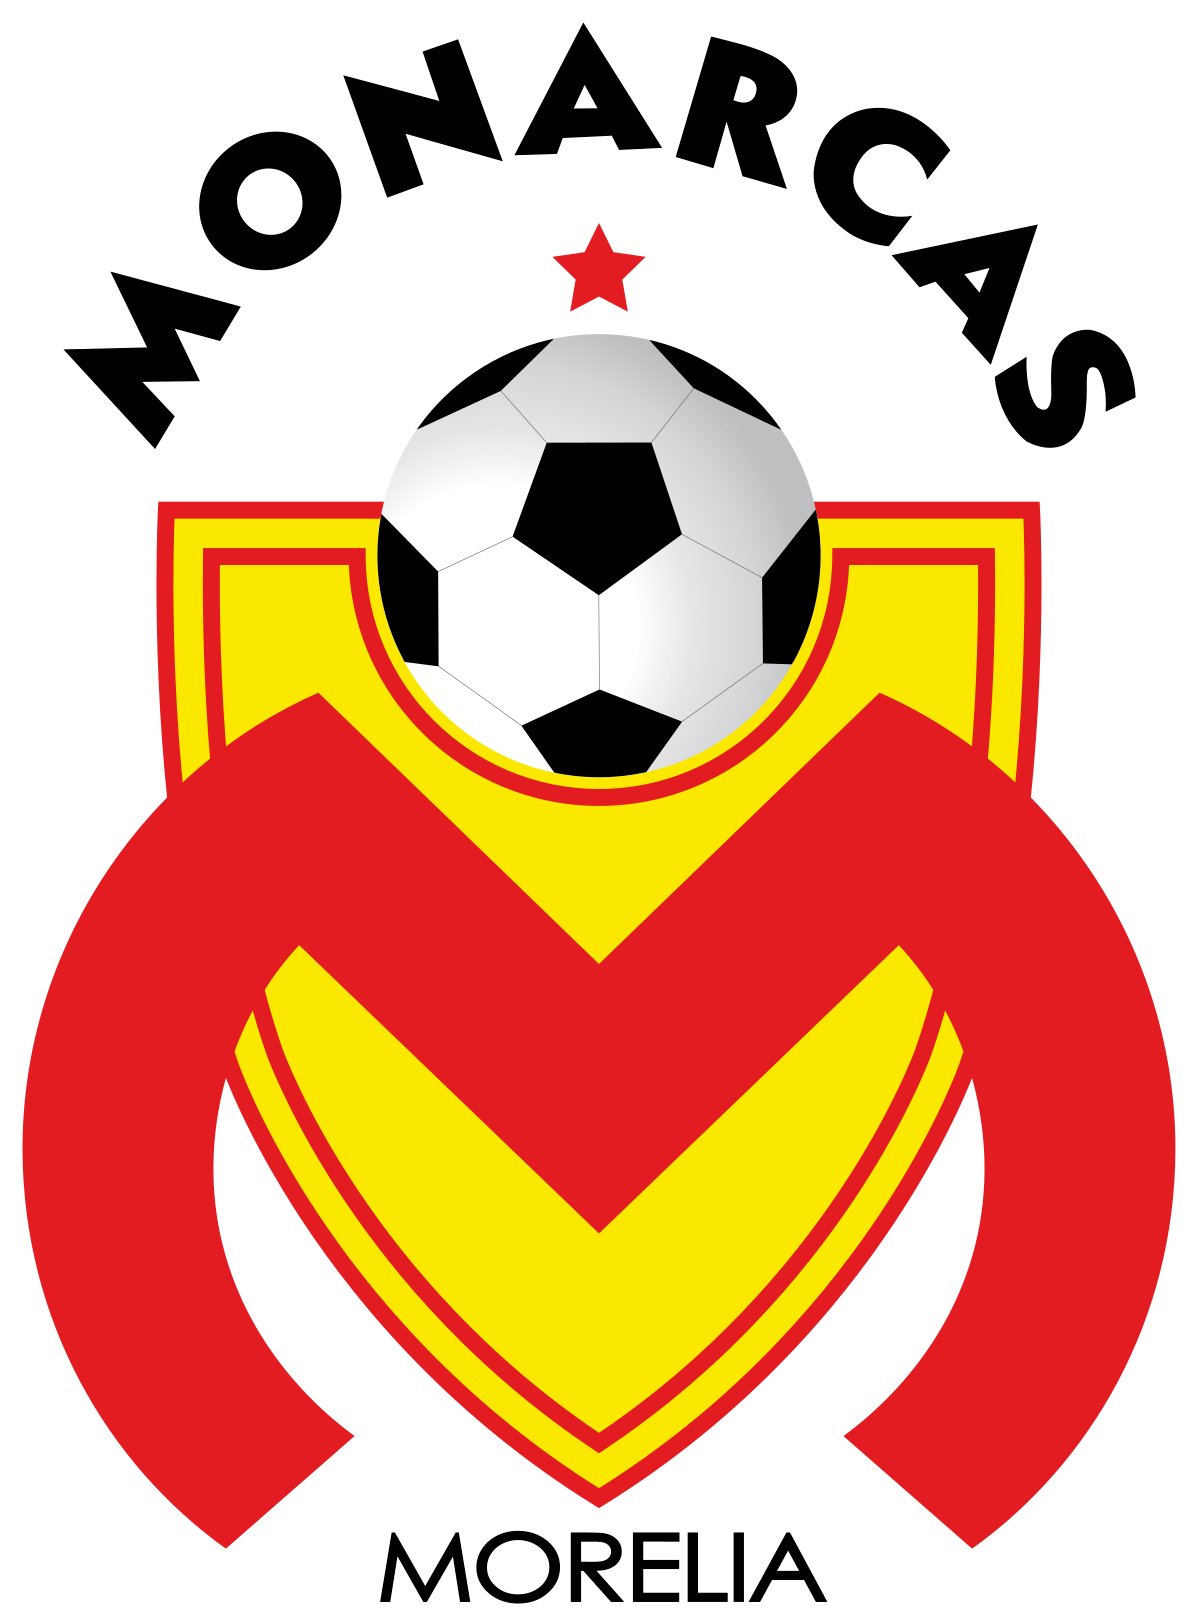 All-New Mazatlan FC Liga MX Club Launched - No More Monarcas Morelia -  Footy Headlines